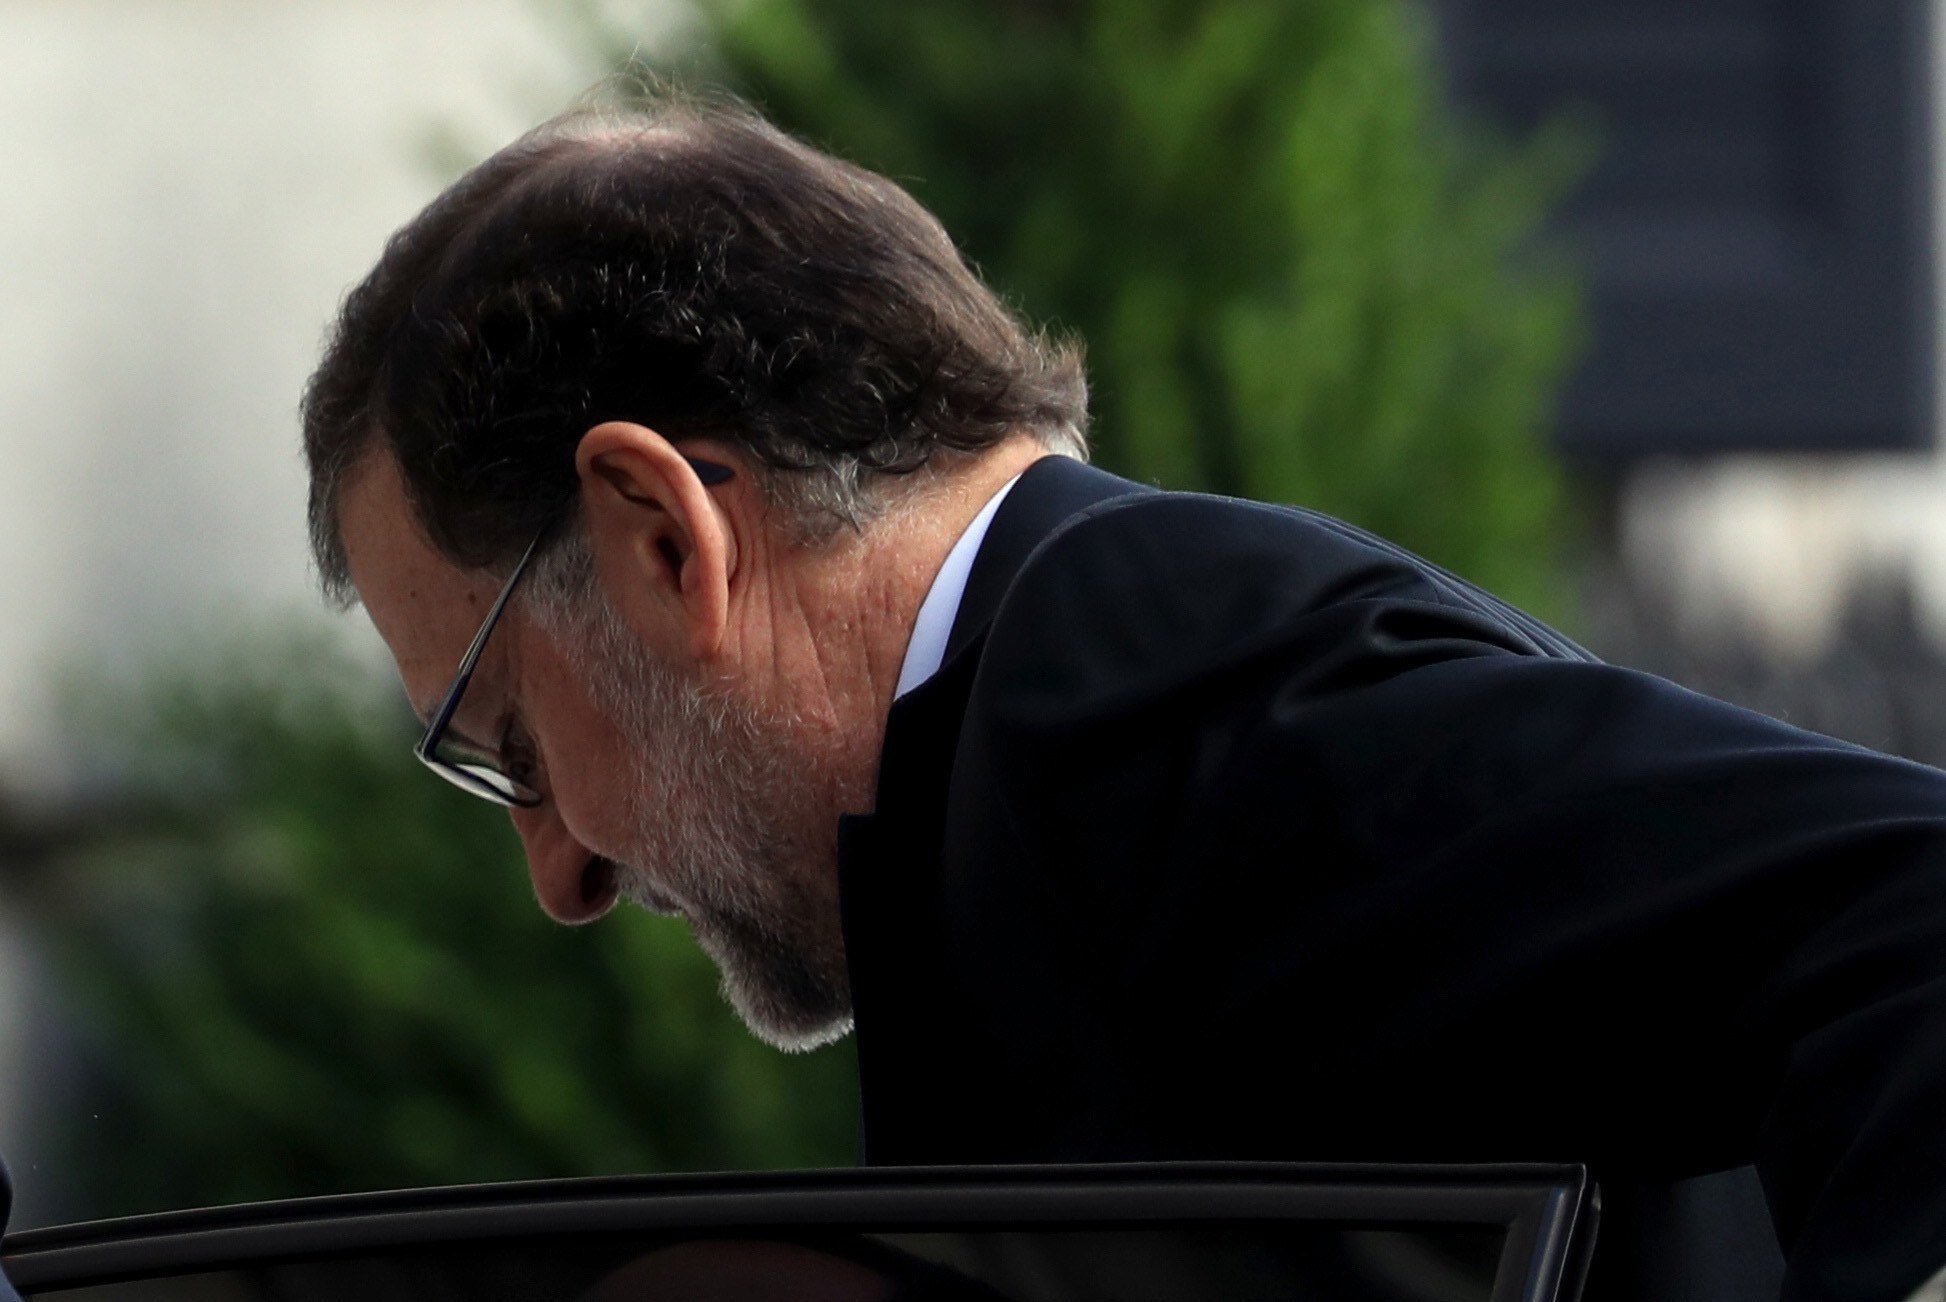 La Púnica vuelve a sacudir al PP, antes del testimonio de Rajoy por la Gürtel